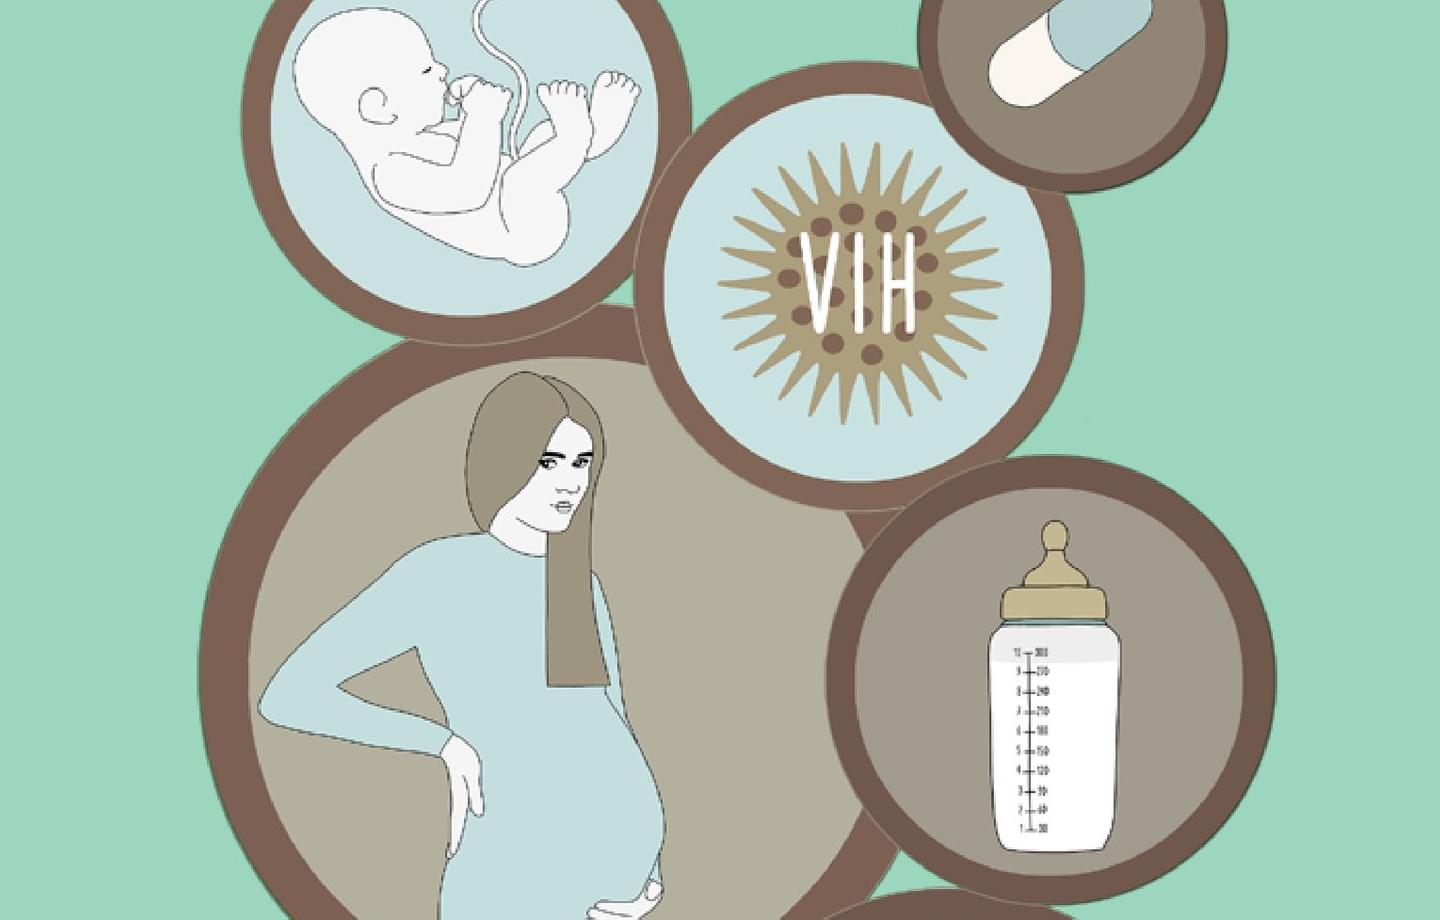  VIH, embarazo y salud materna